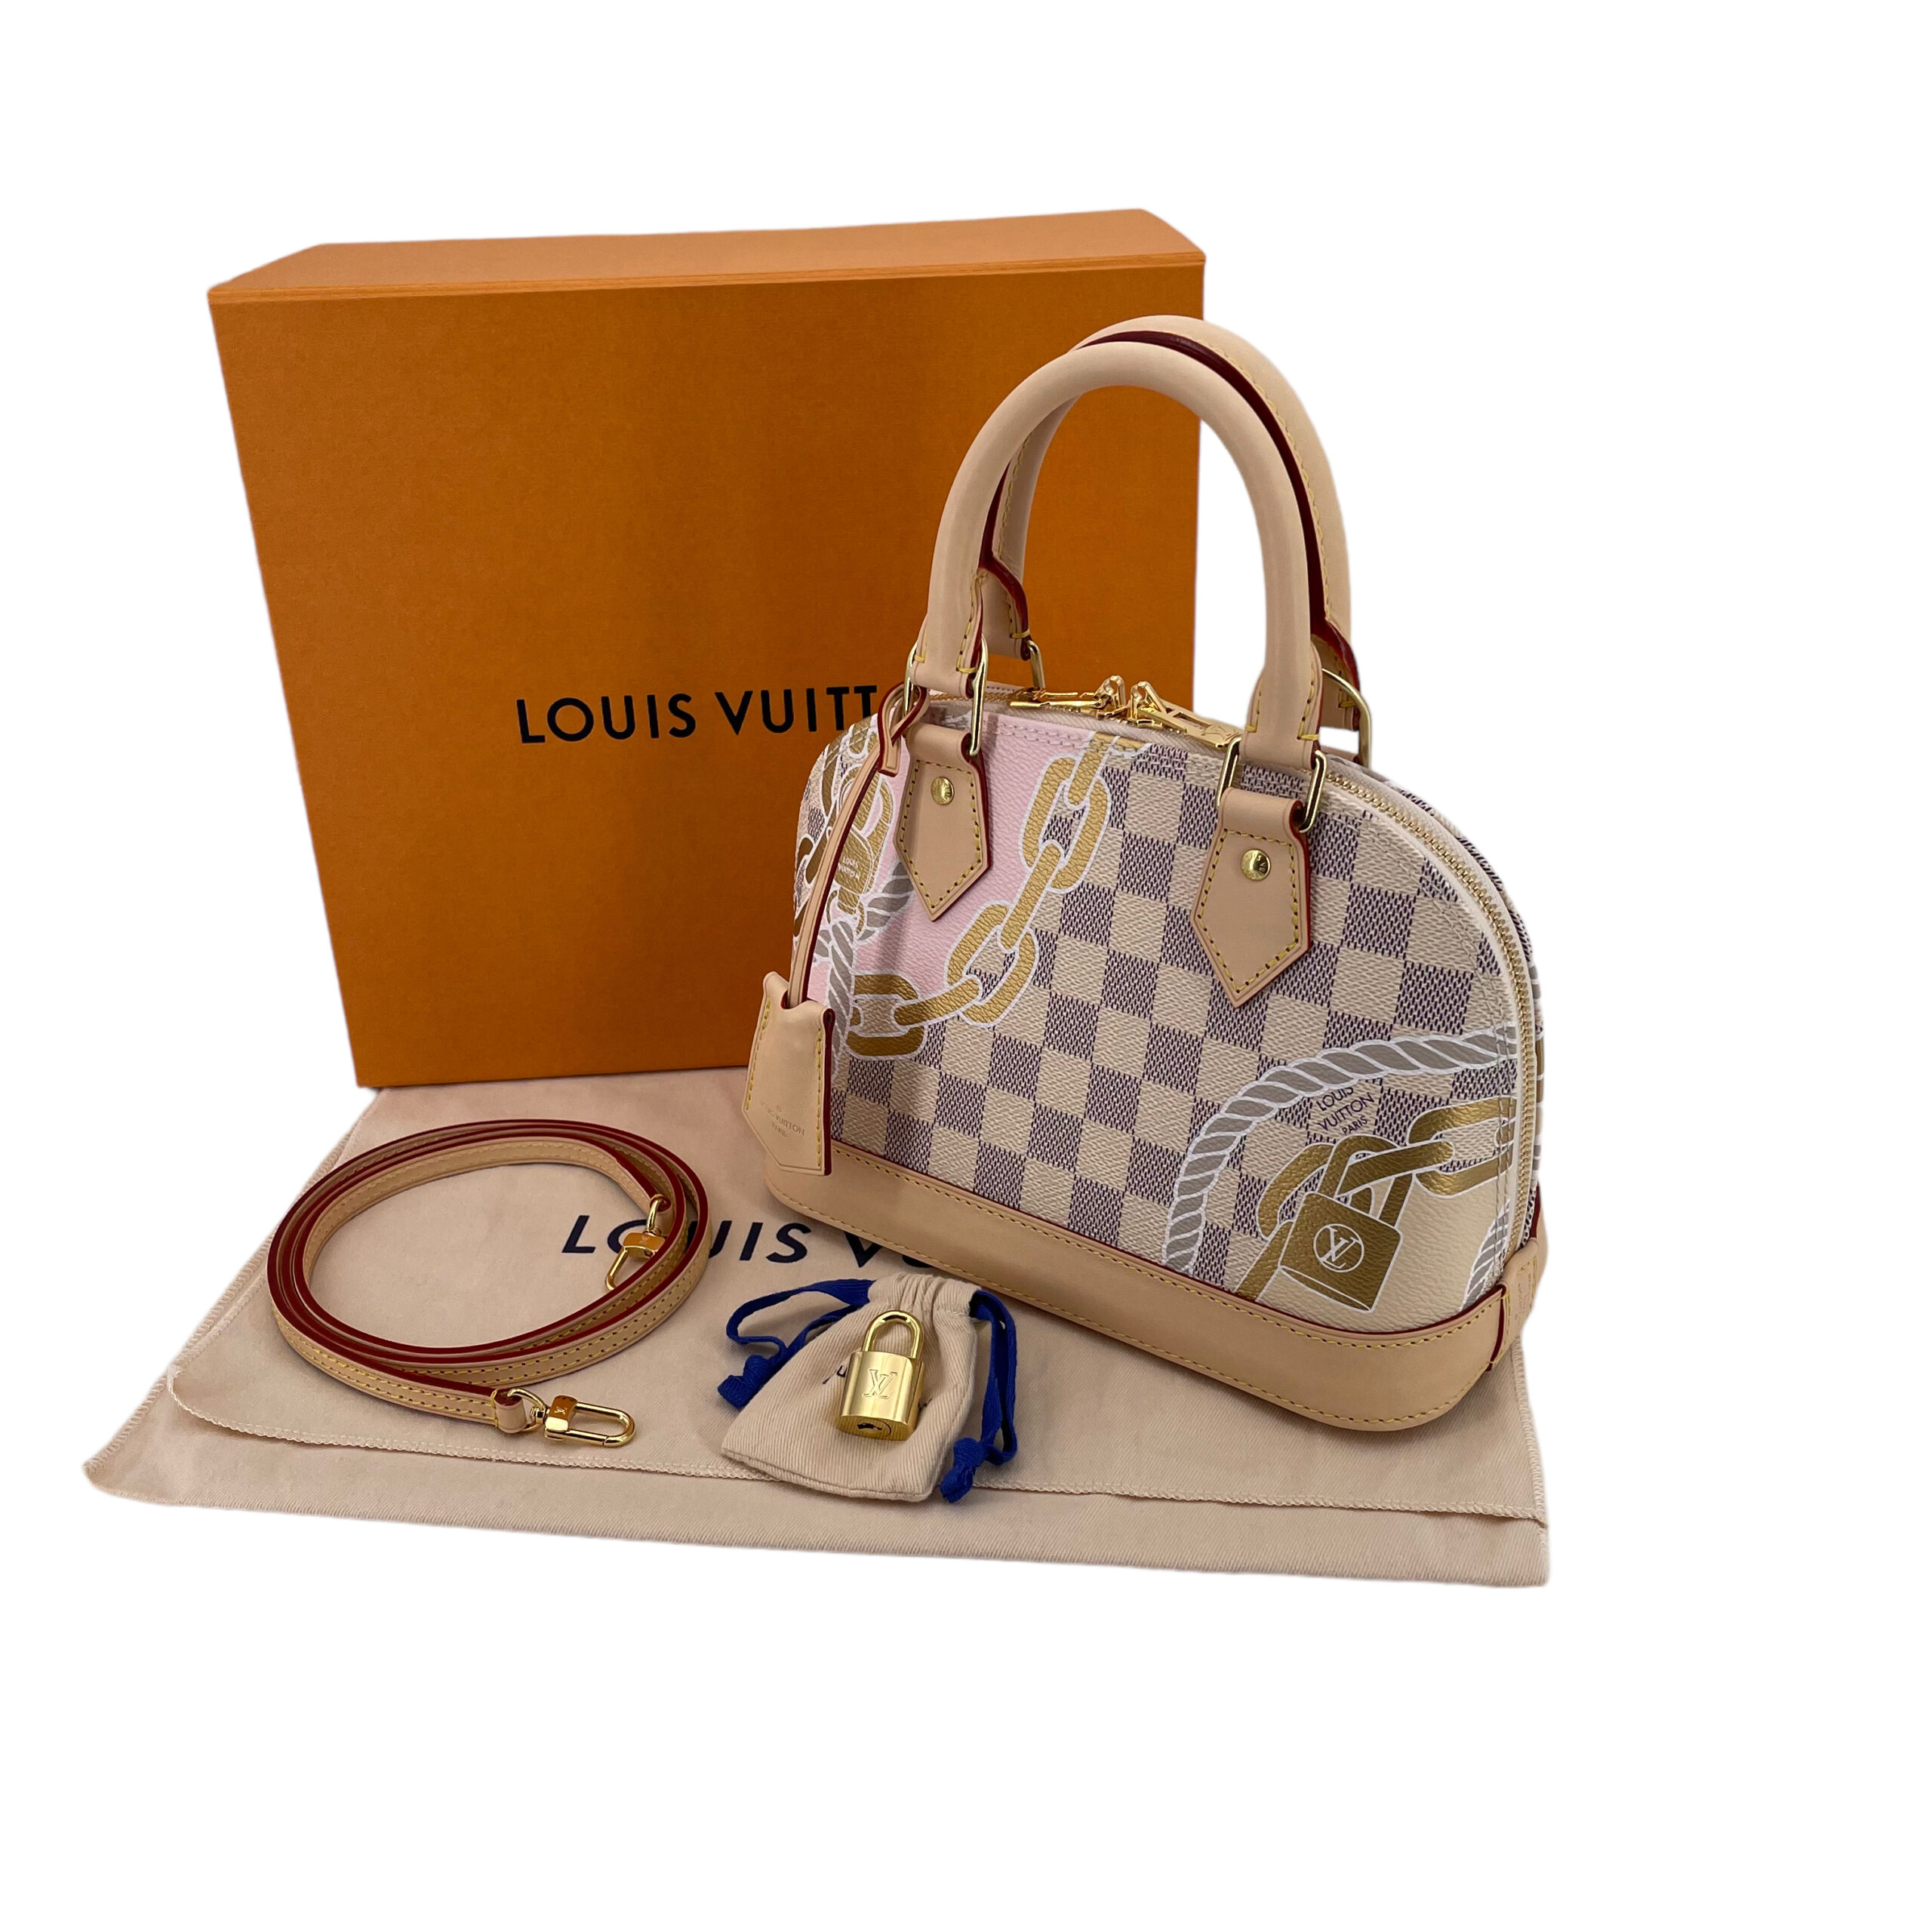 Louis Vuitton Illustre Funfair Vivienne Japan Edition Keychain Bag Charm -  I Love Handbags